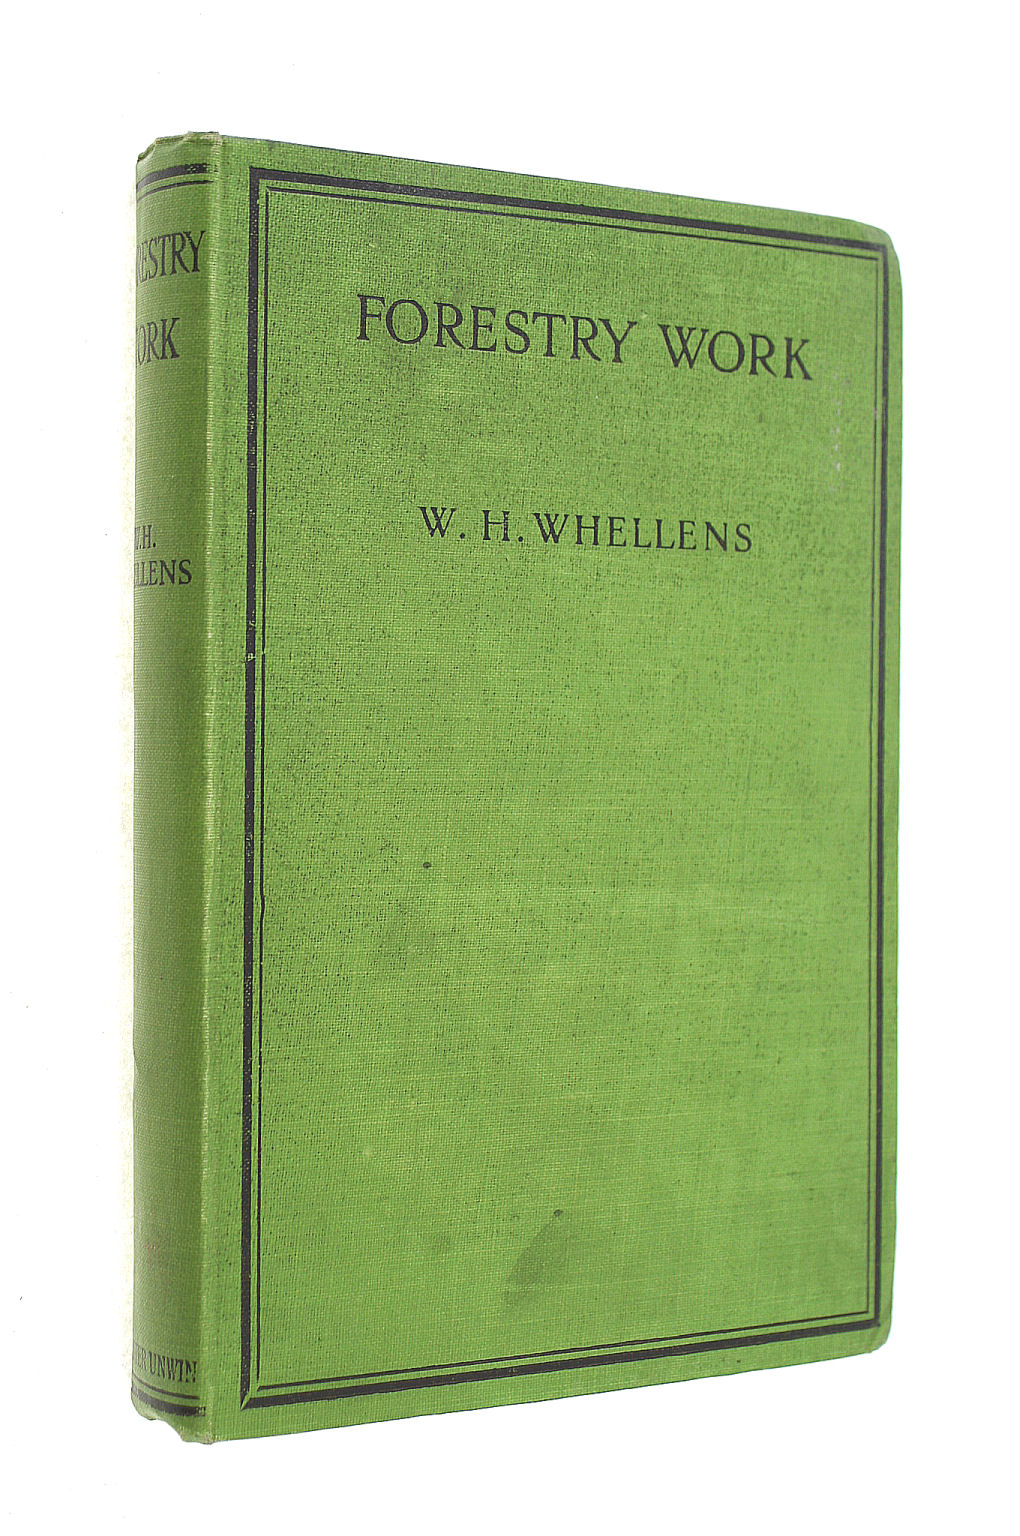 WHELLENS, W. H. - Forestry Work